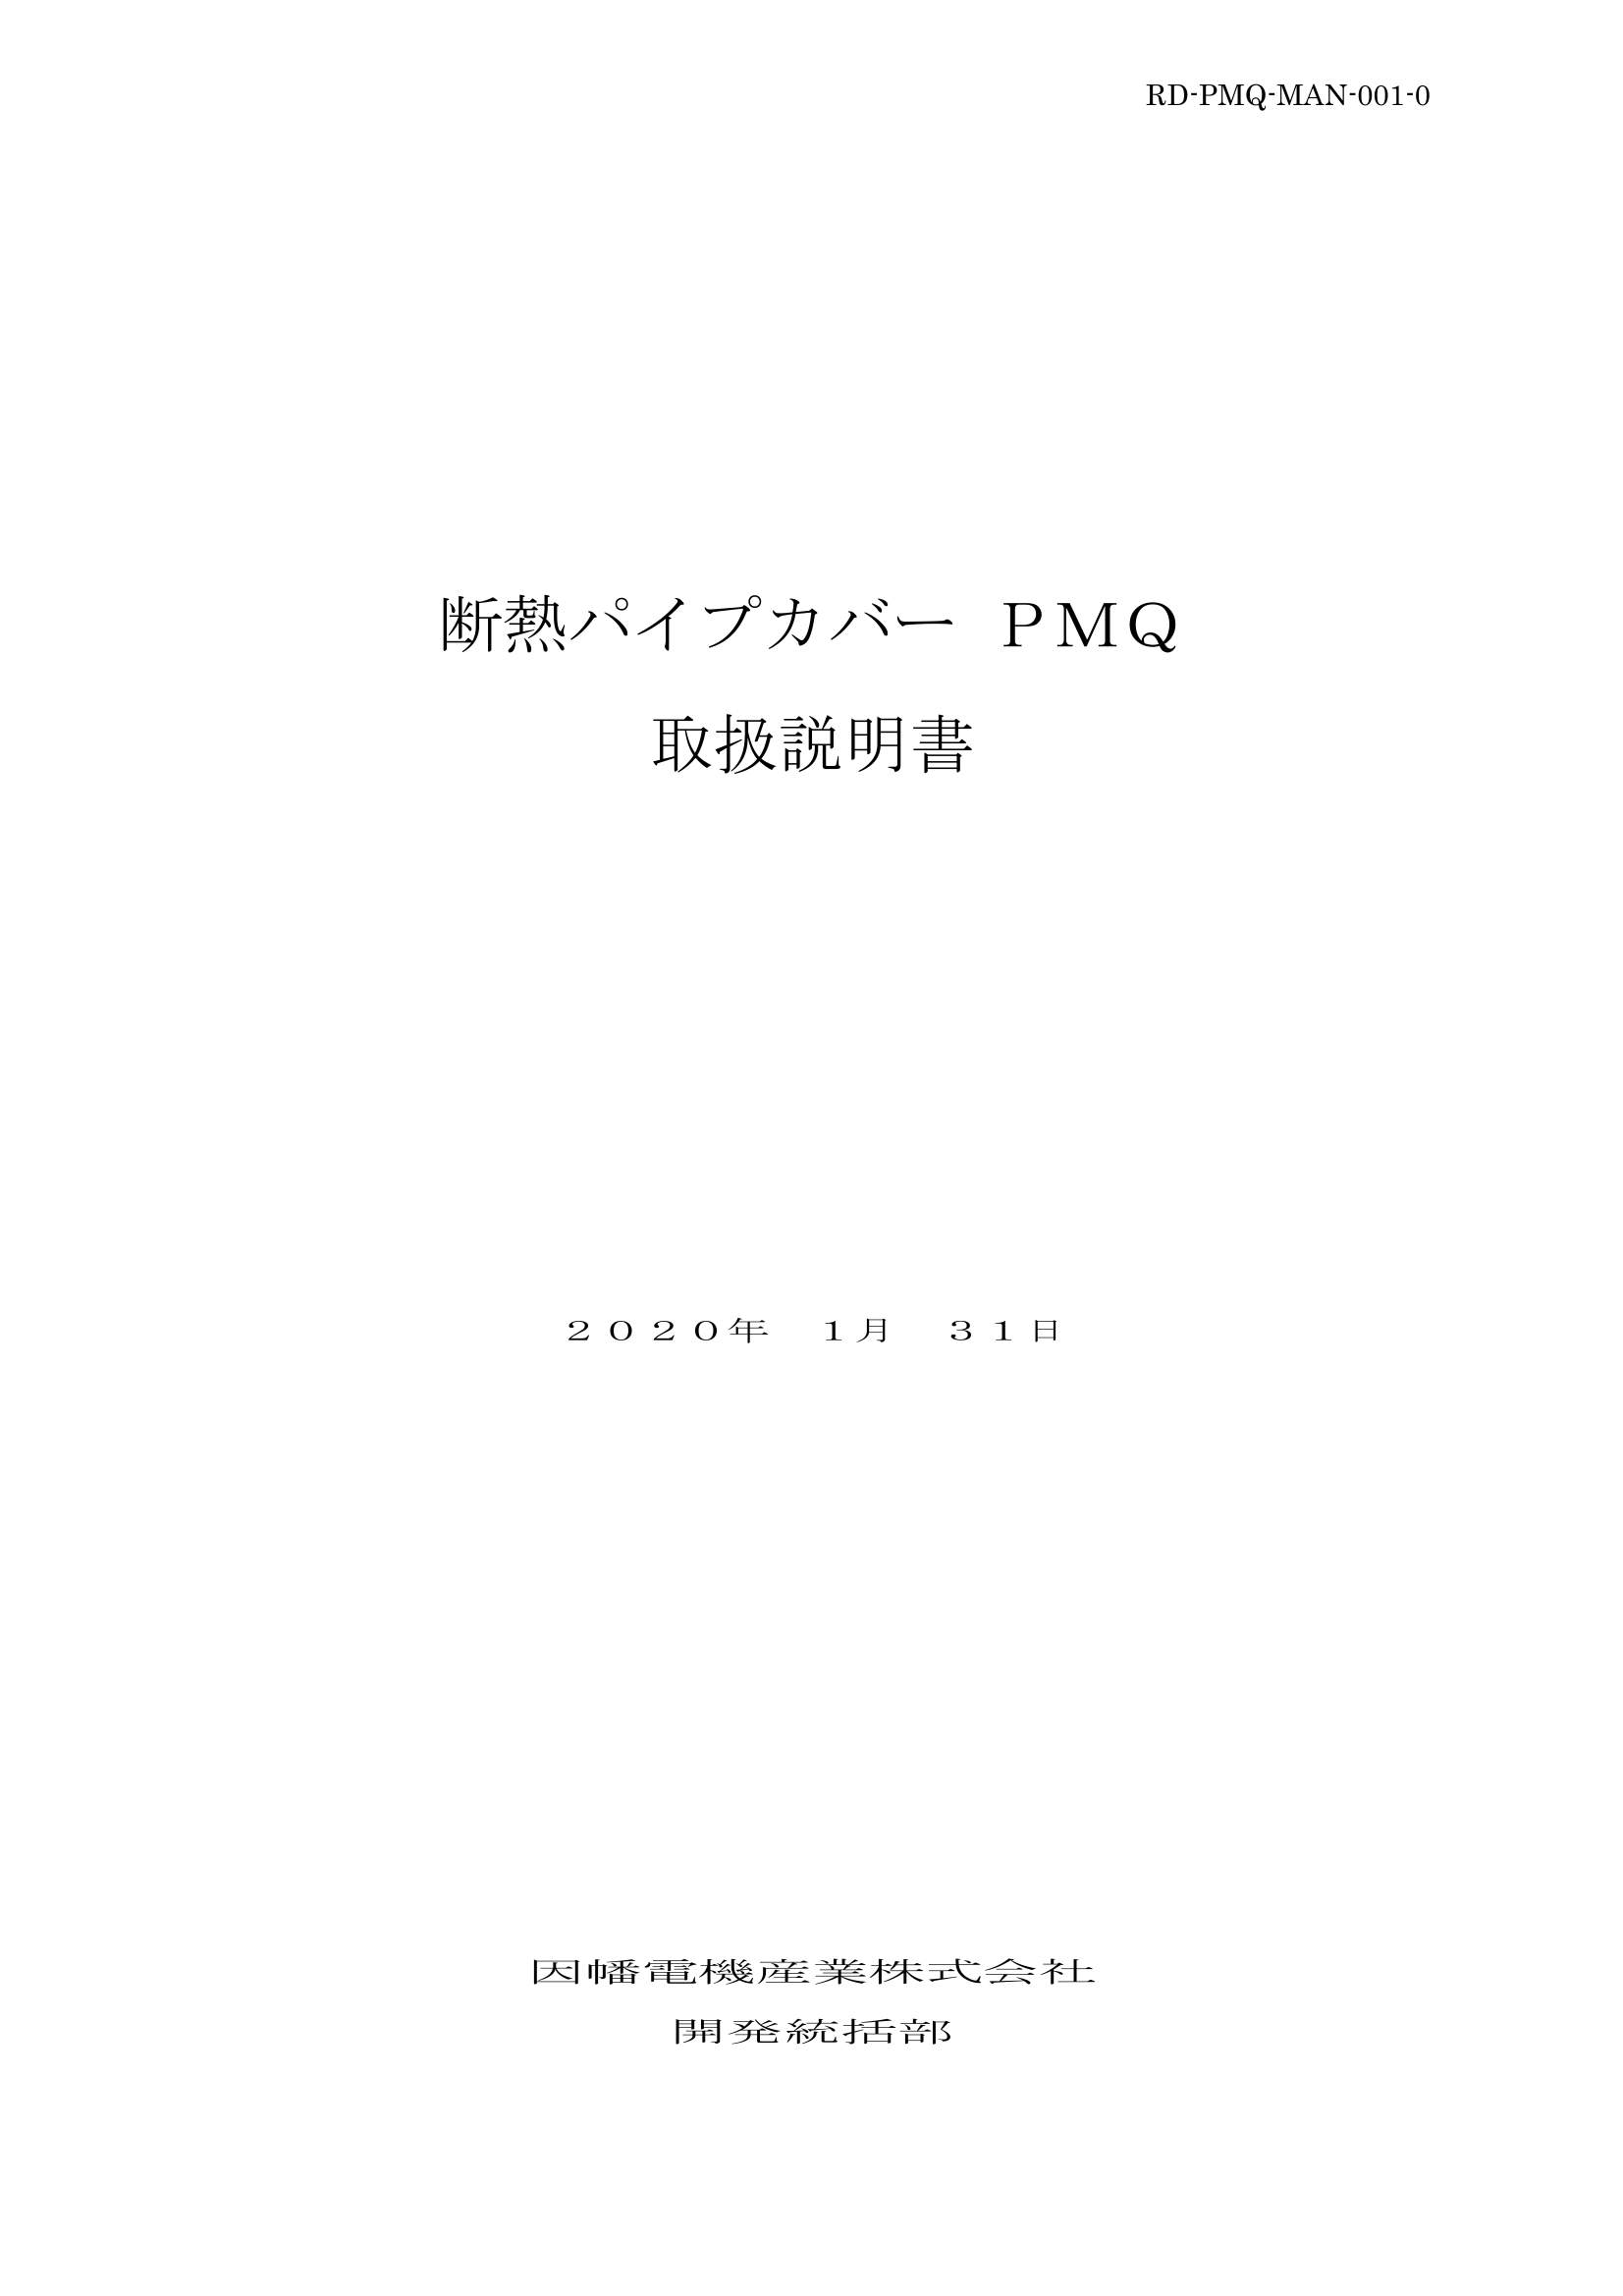 PMQ_取扱説明書_20200131.pdf